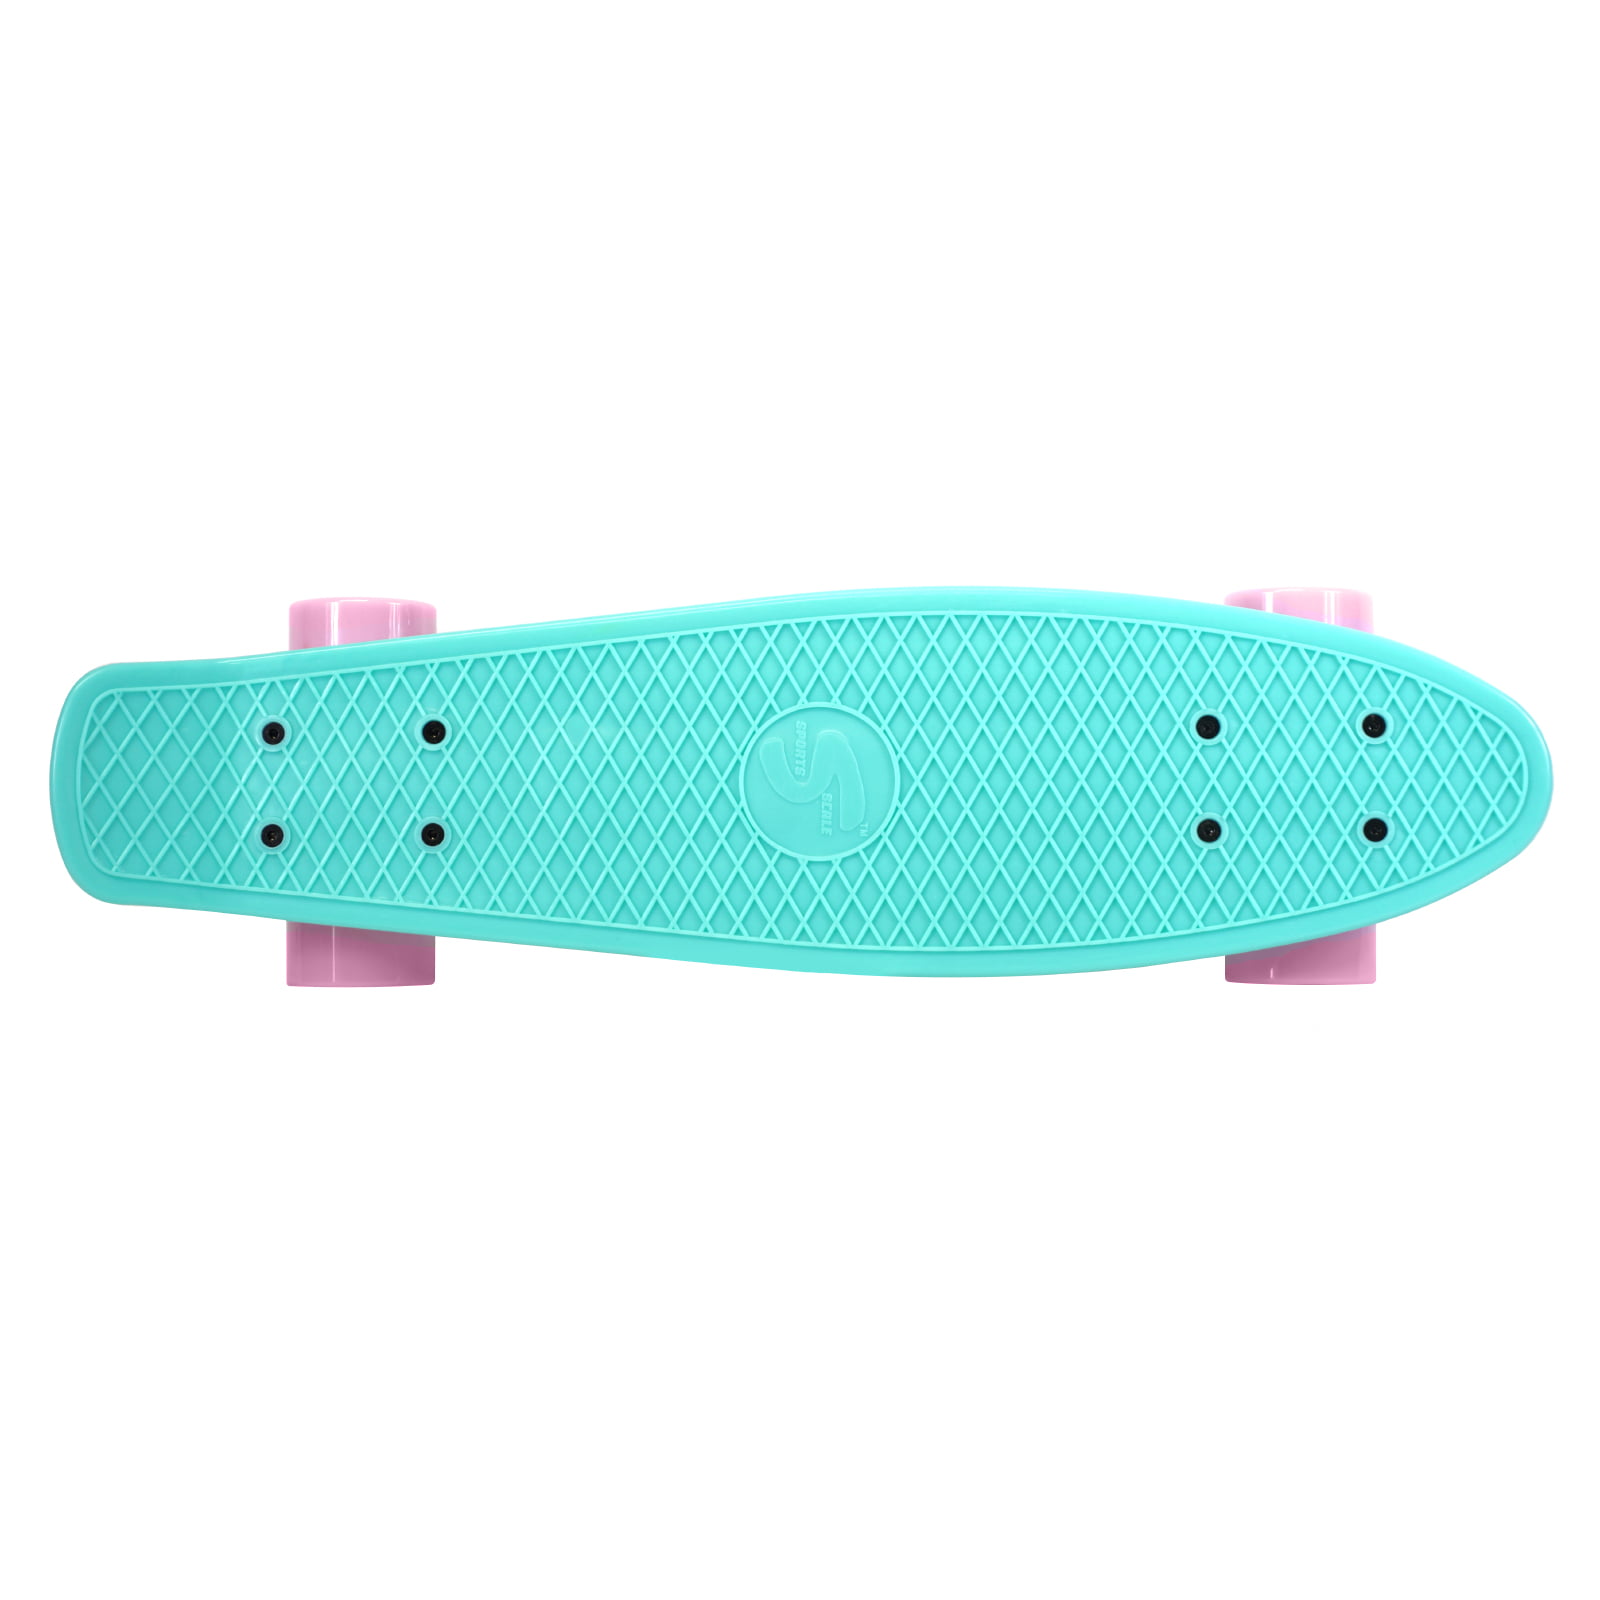 Feldus retro skateboard pennyboard completamente Street Sport mini Cruiser Board